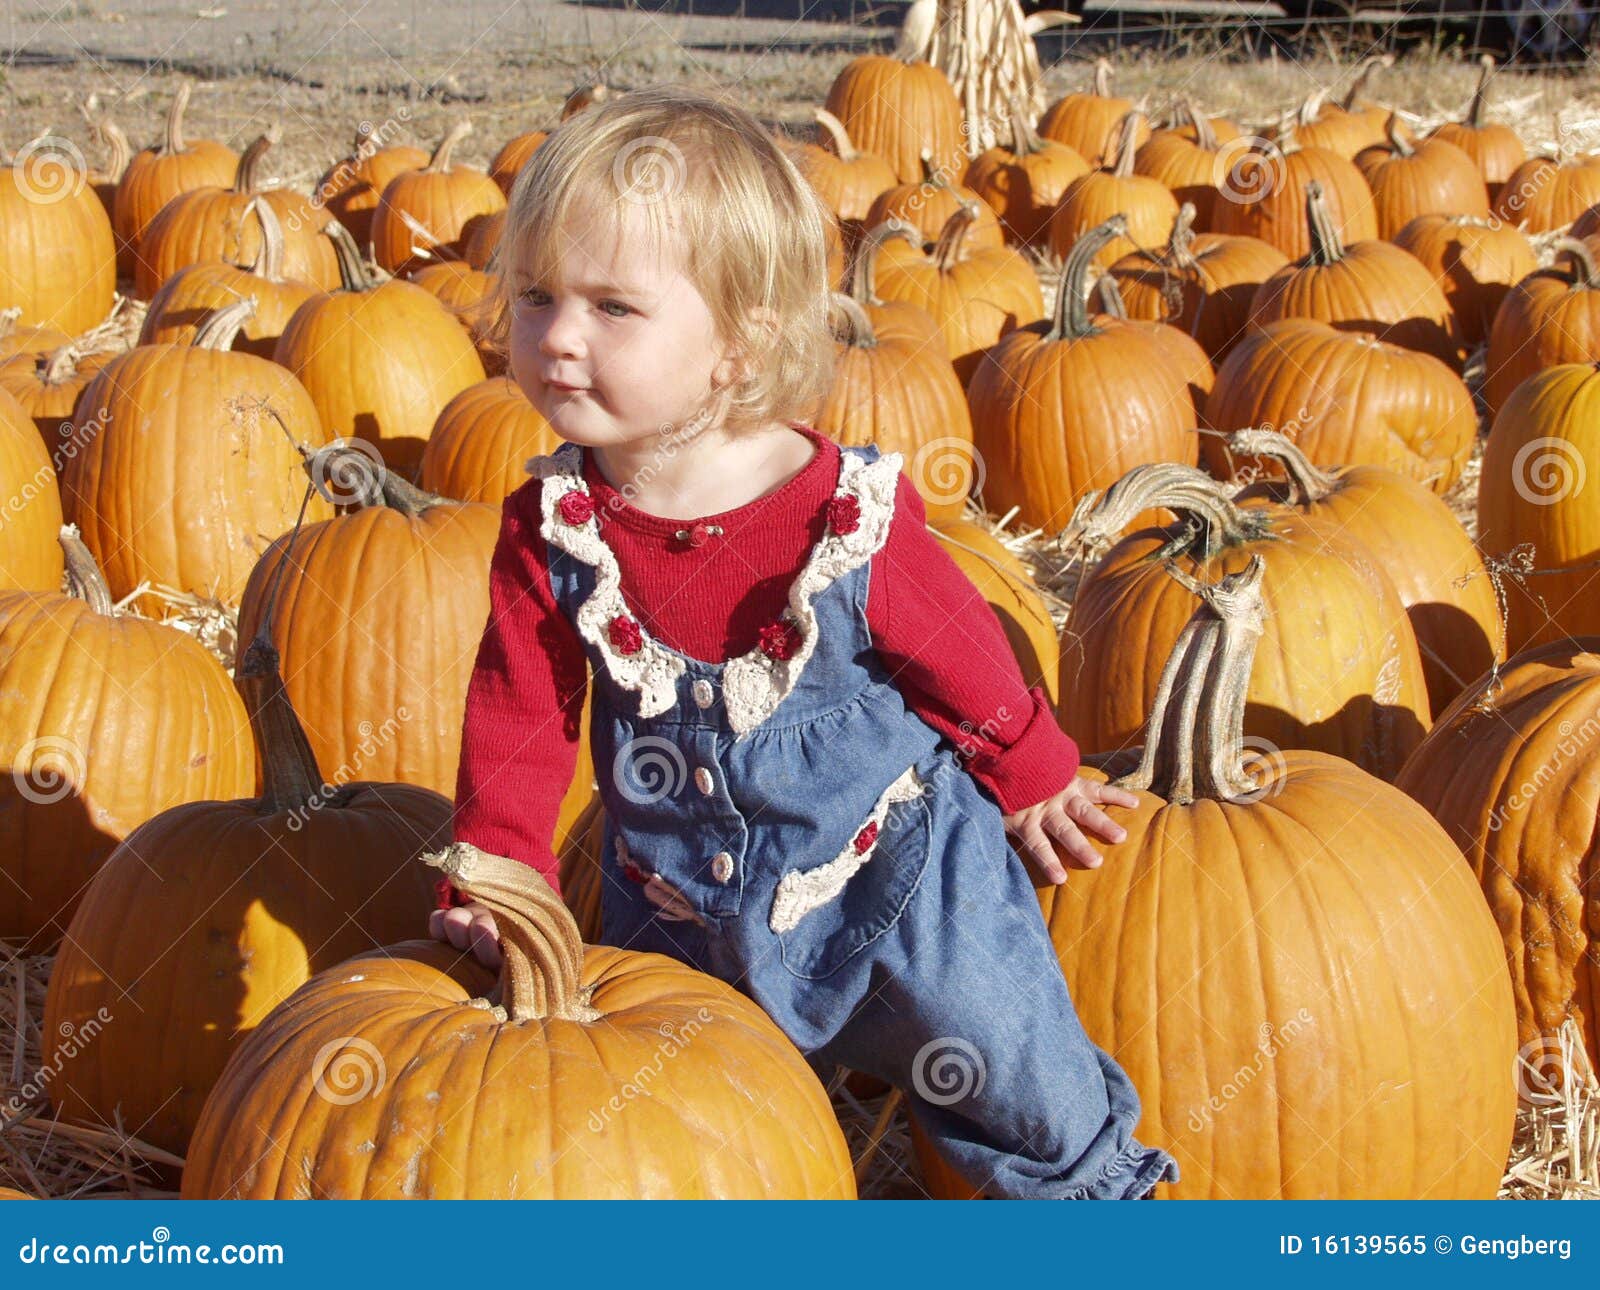 Pumpkin patch girl 3 stock image. Image of october, season - 16139565